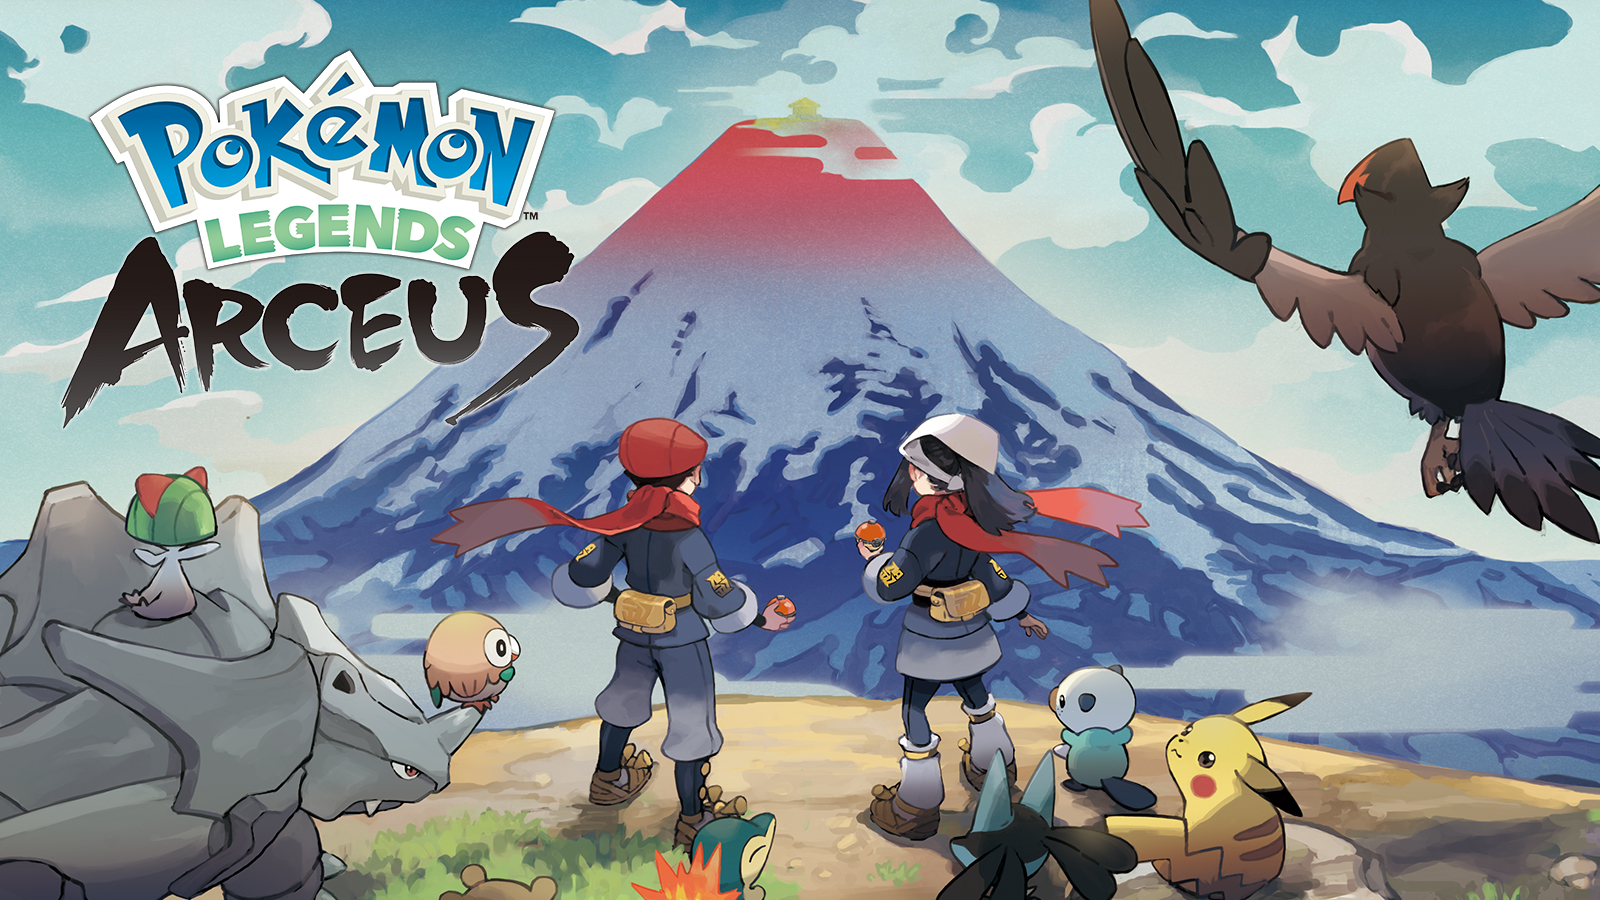 Pokémon legends arceus HORI collection now up for pre-order - 9to5Toys